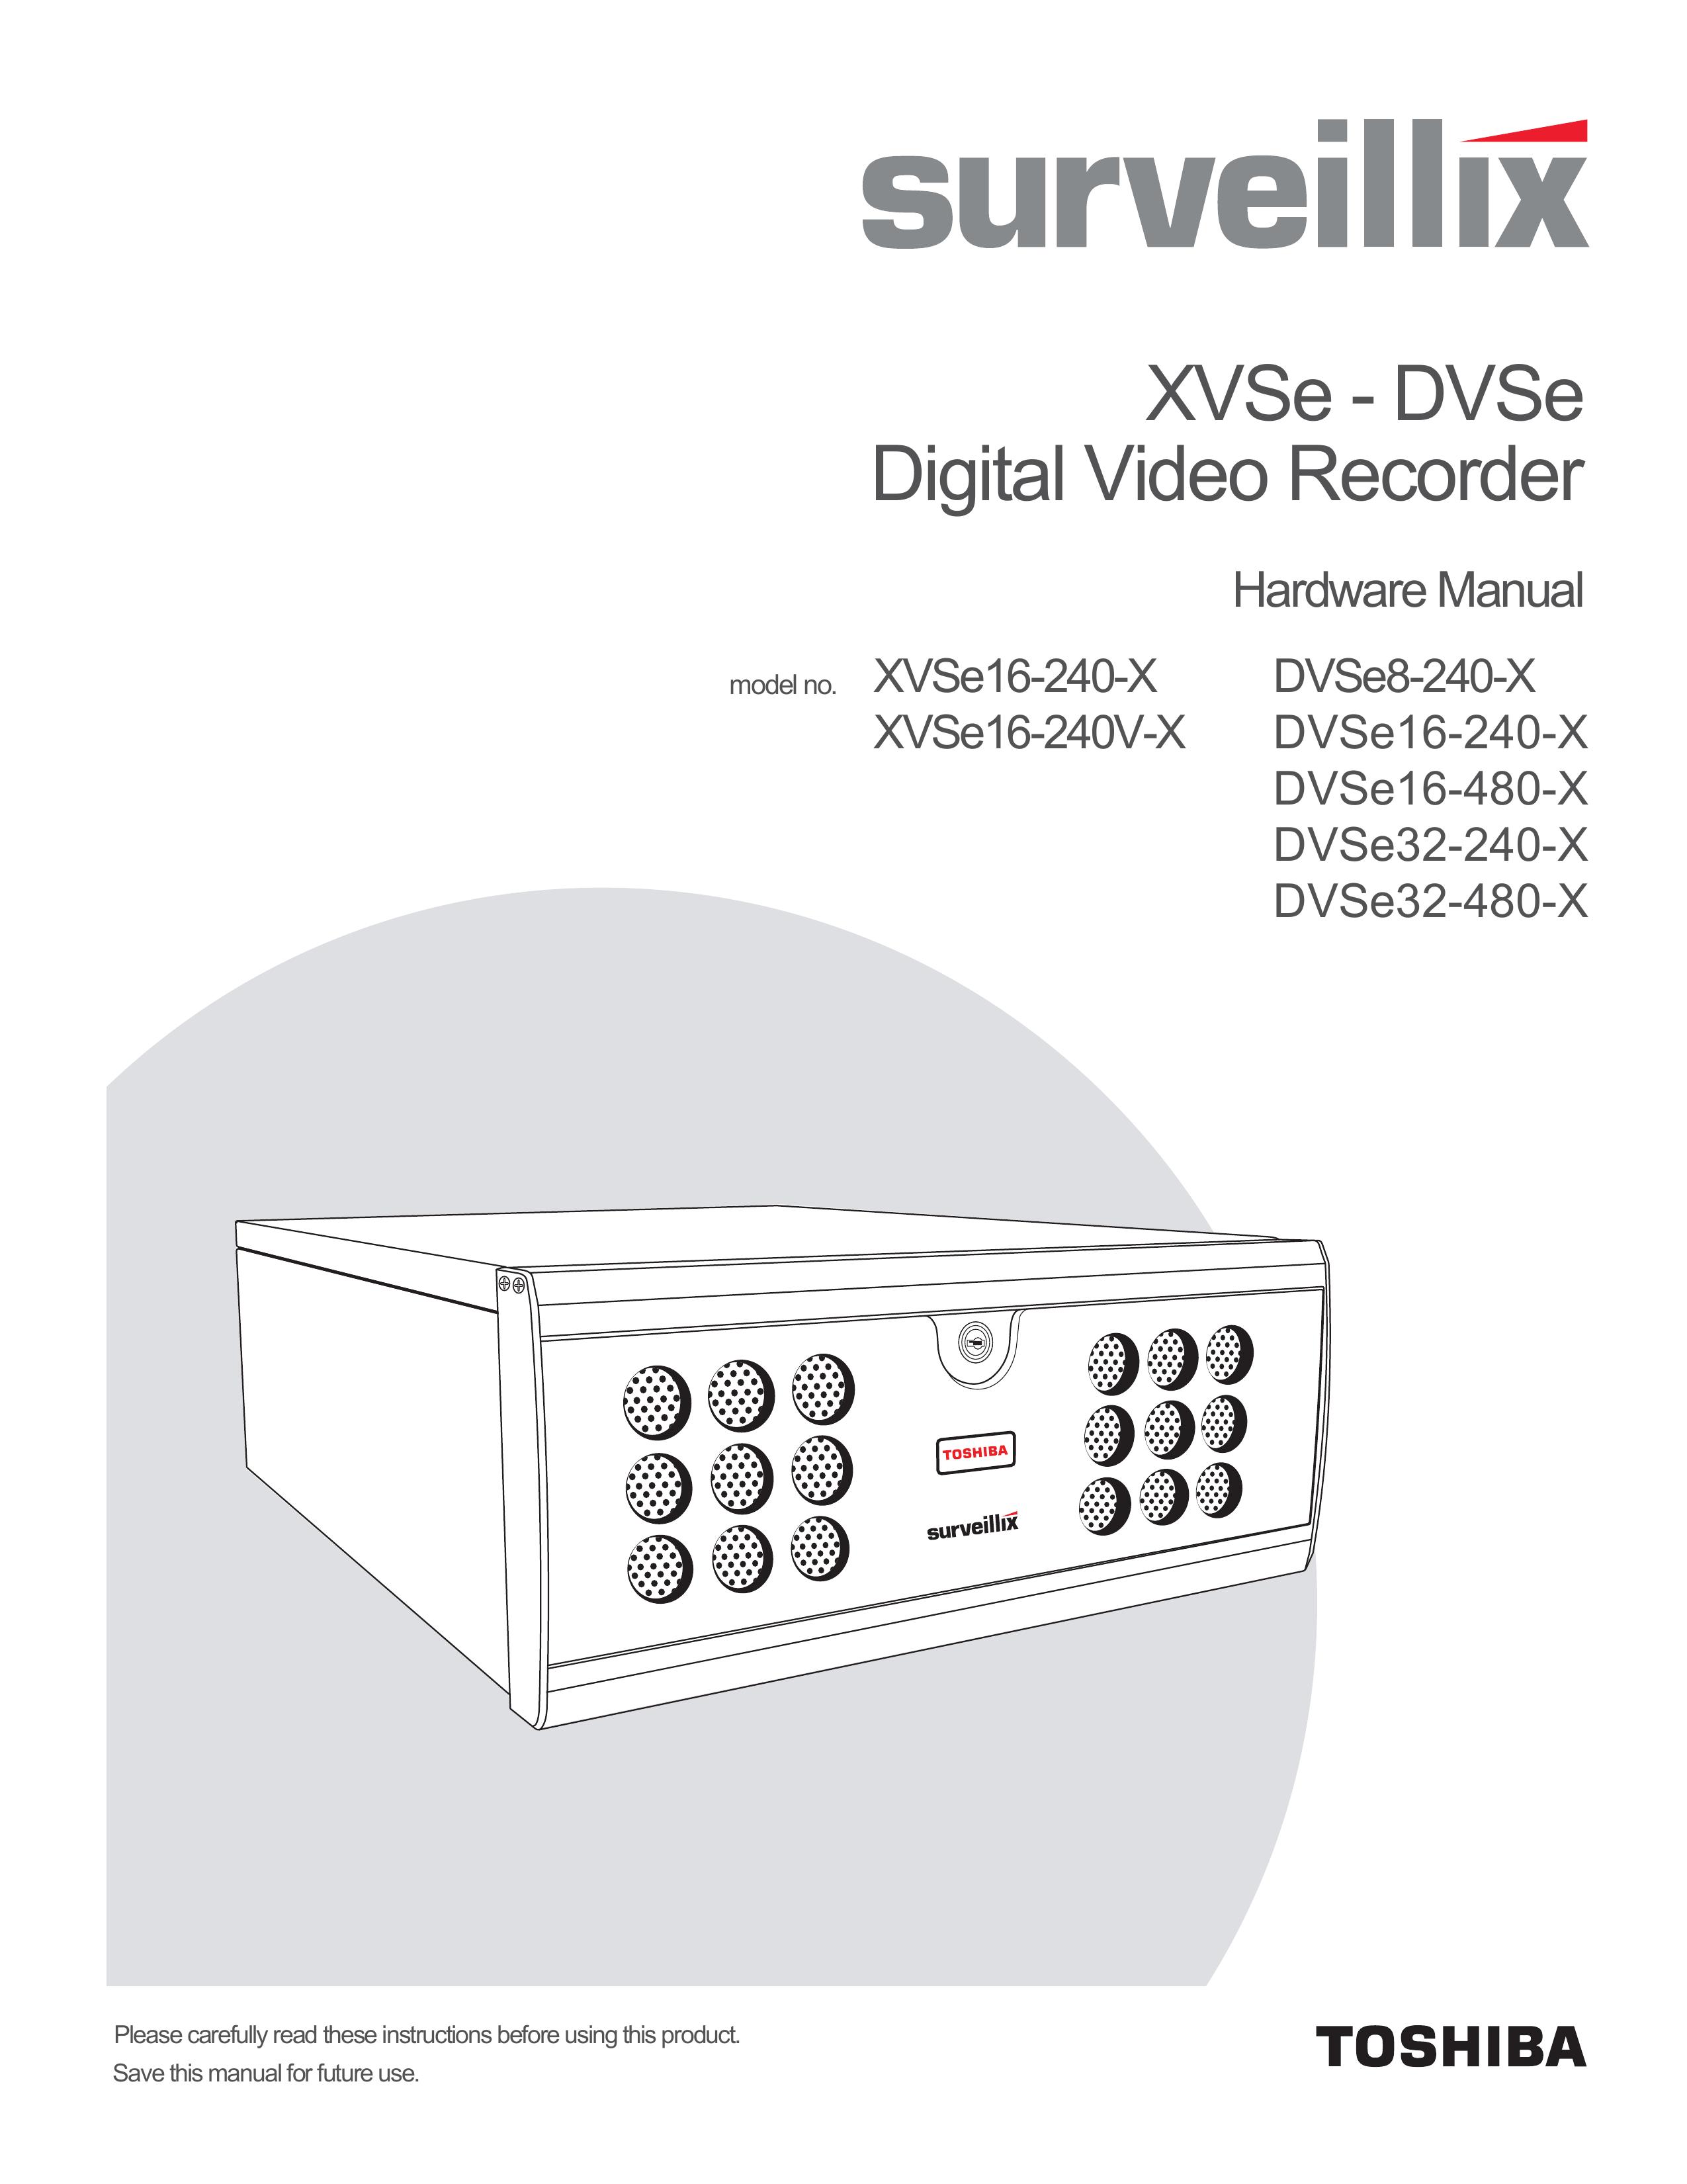 Toshiba DVSe32-480-X Digital Photo Keychain User Manual